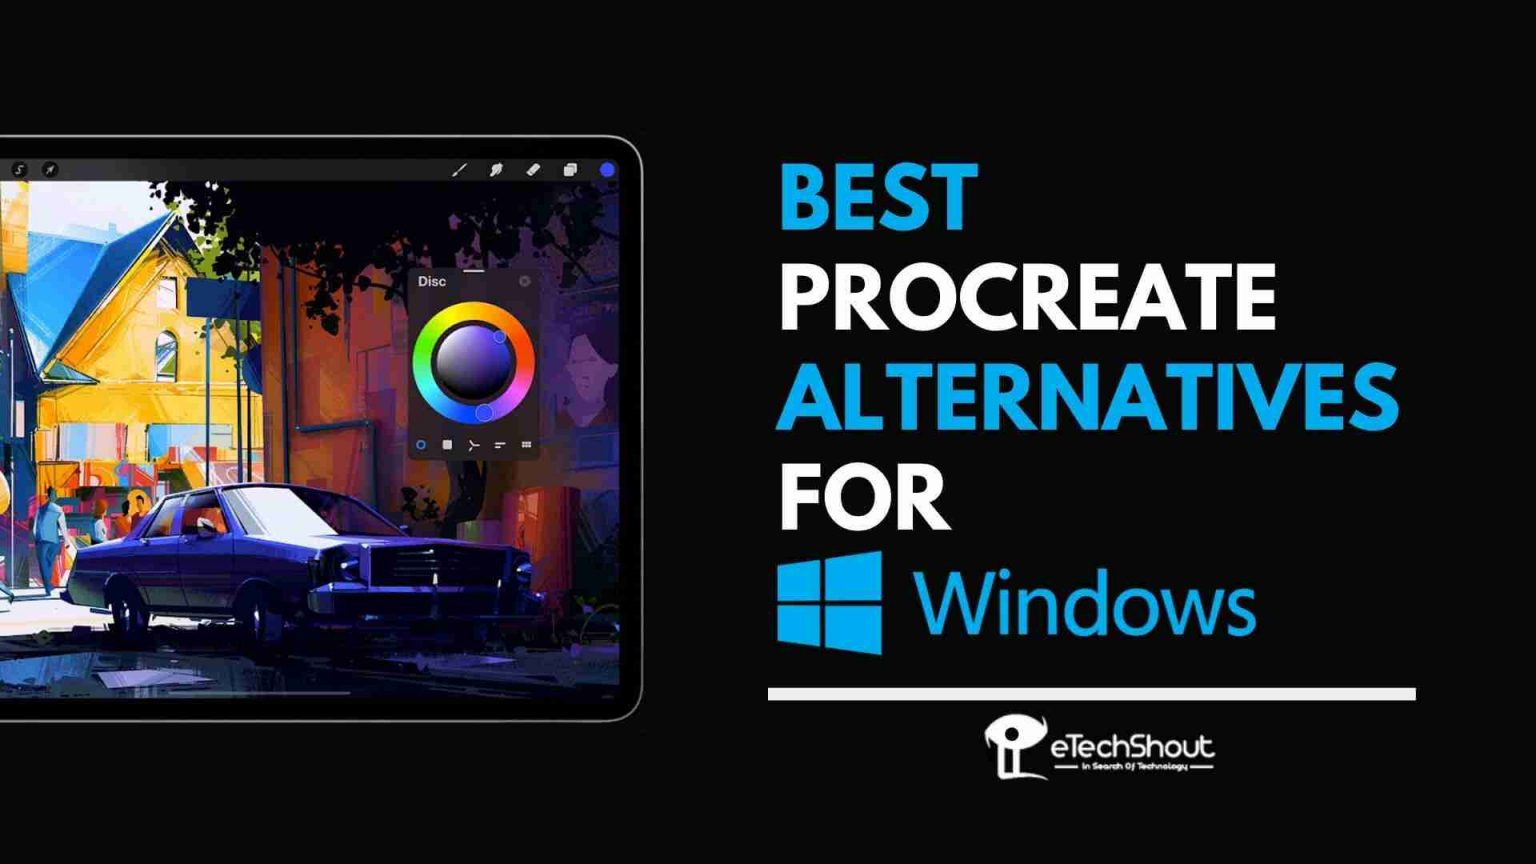 procreate for windows free